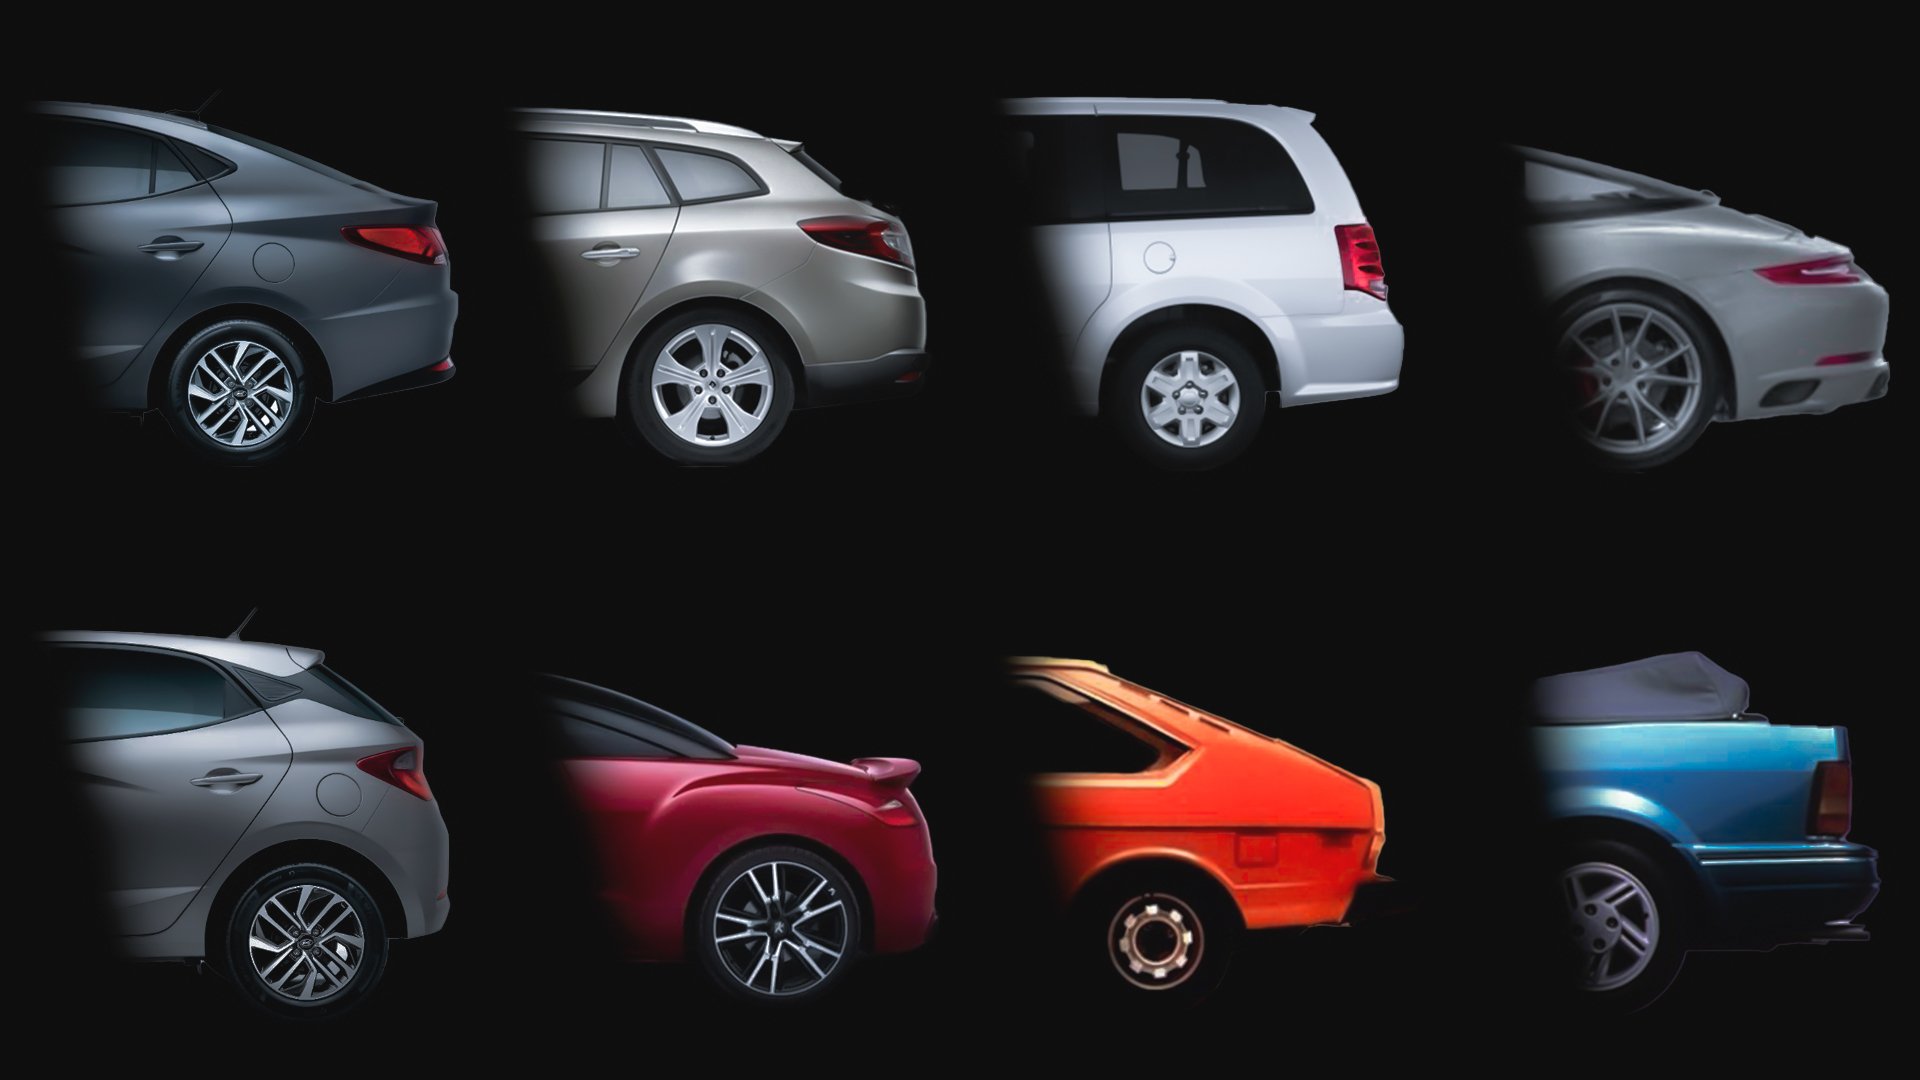 SUV, hatch ou sedan? Tipos e modelos de carros para comparar - Blog  Catarina Carros